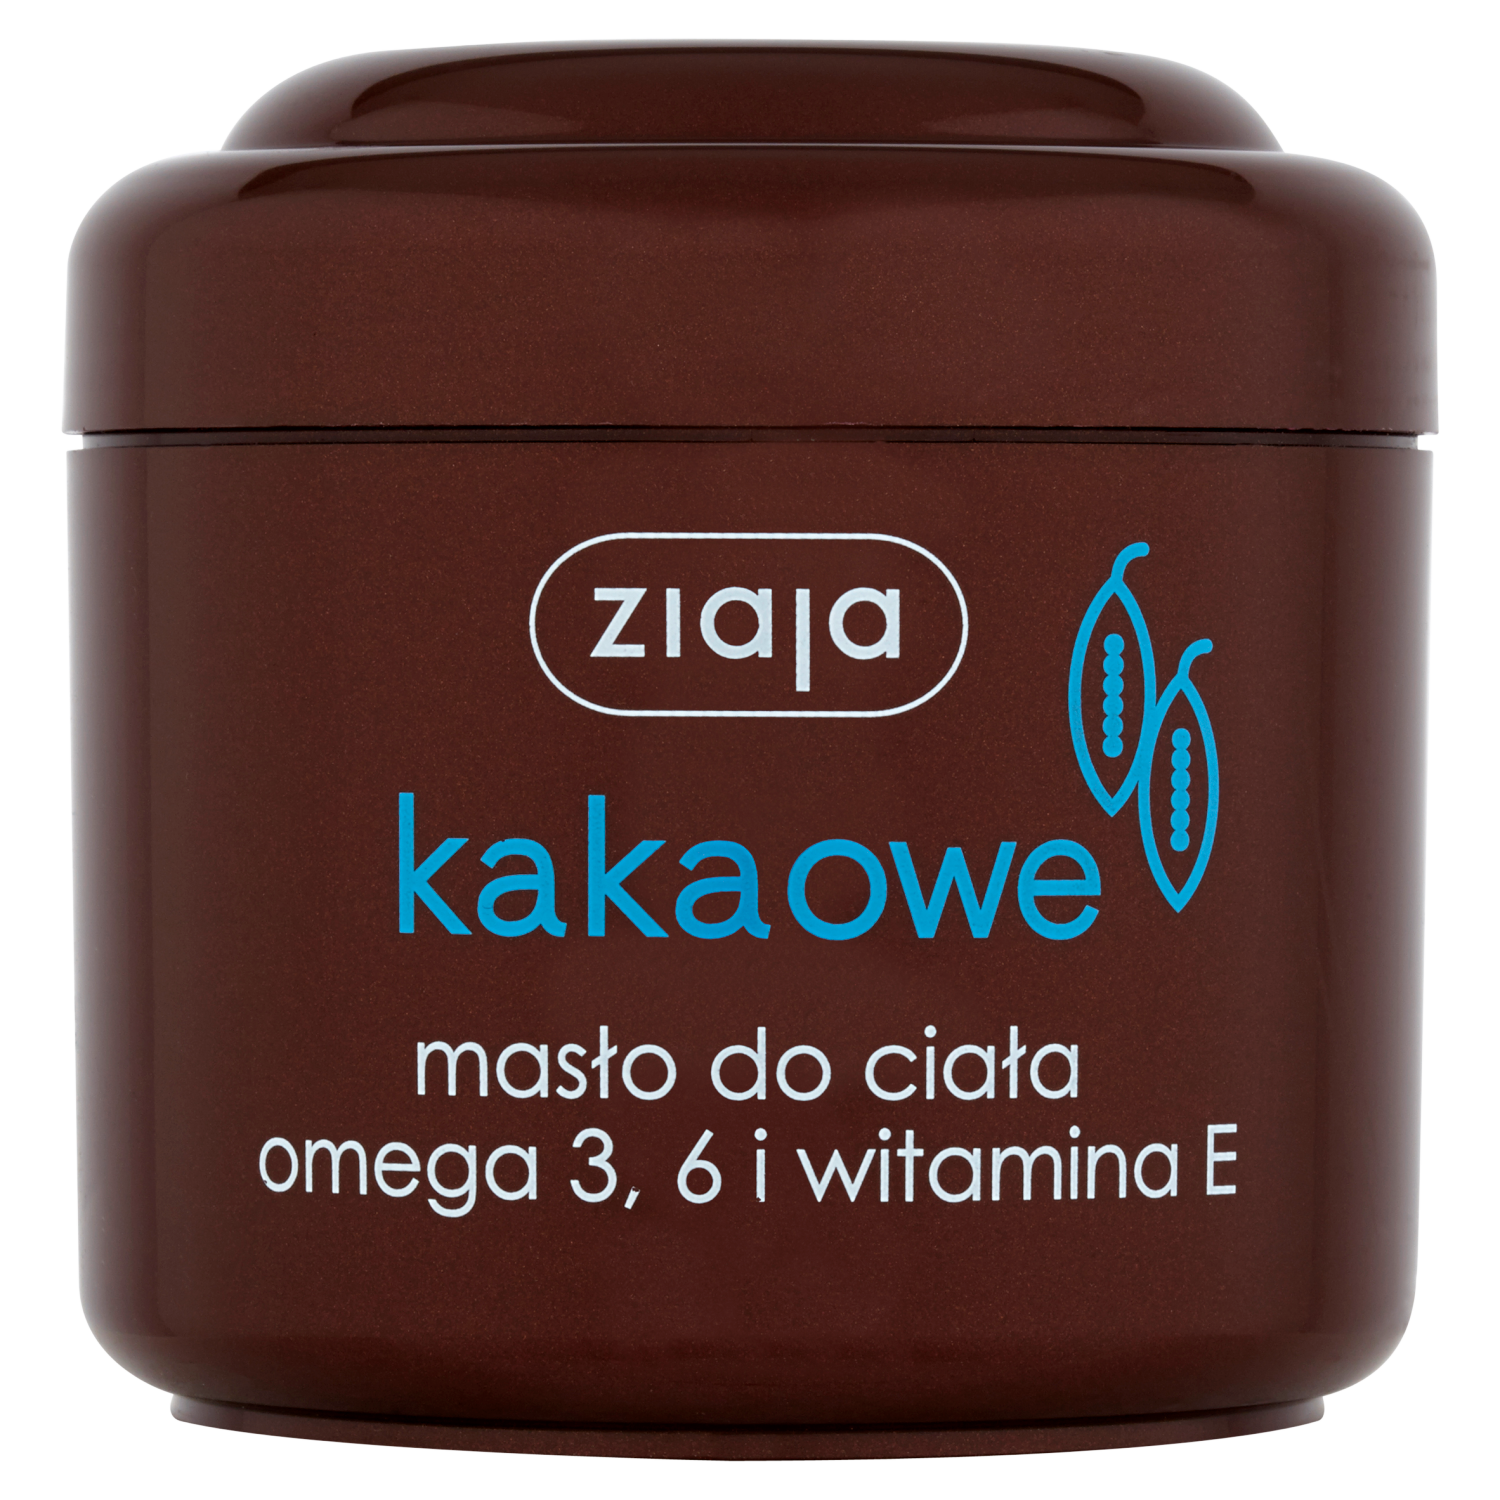 Ziaja Masło Kakaowe регенерирующее масло для тела, 200 мл масло регенерирующее для тела skin 50 мл